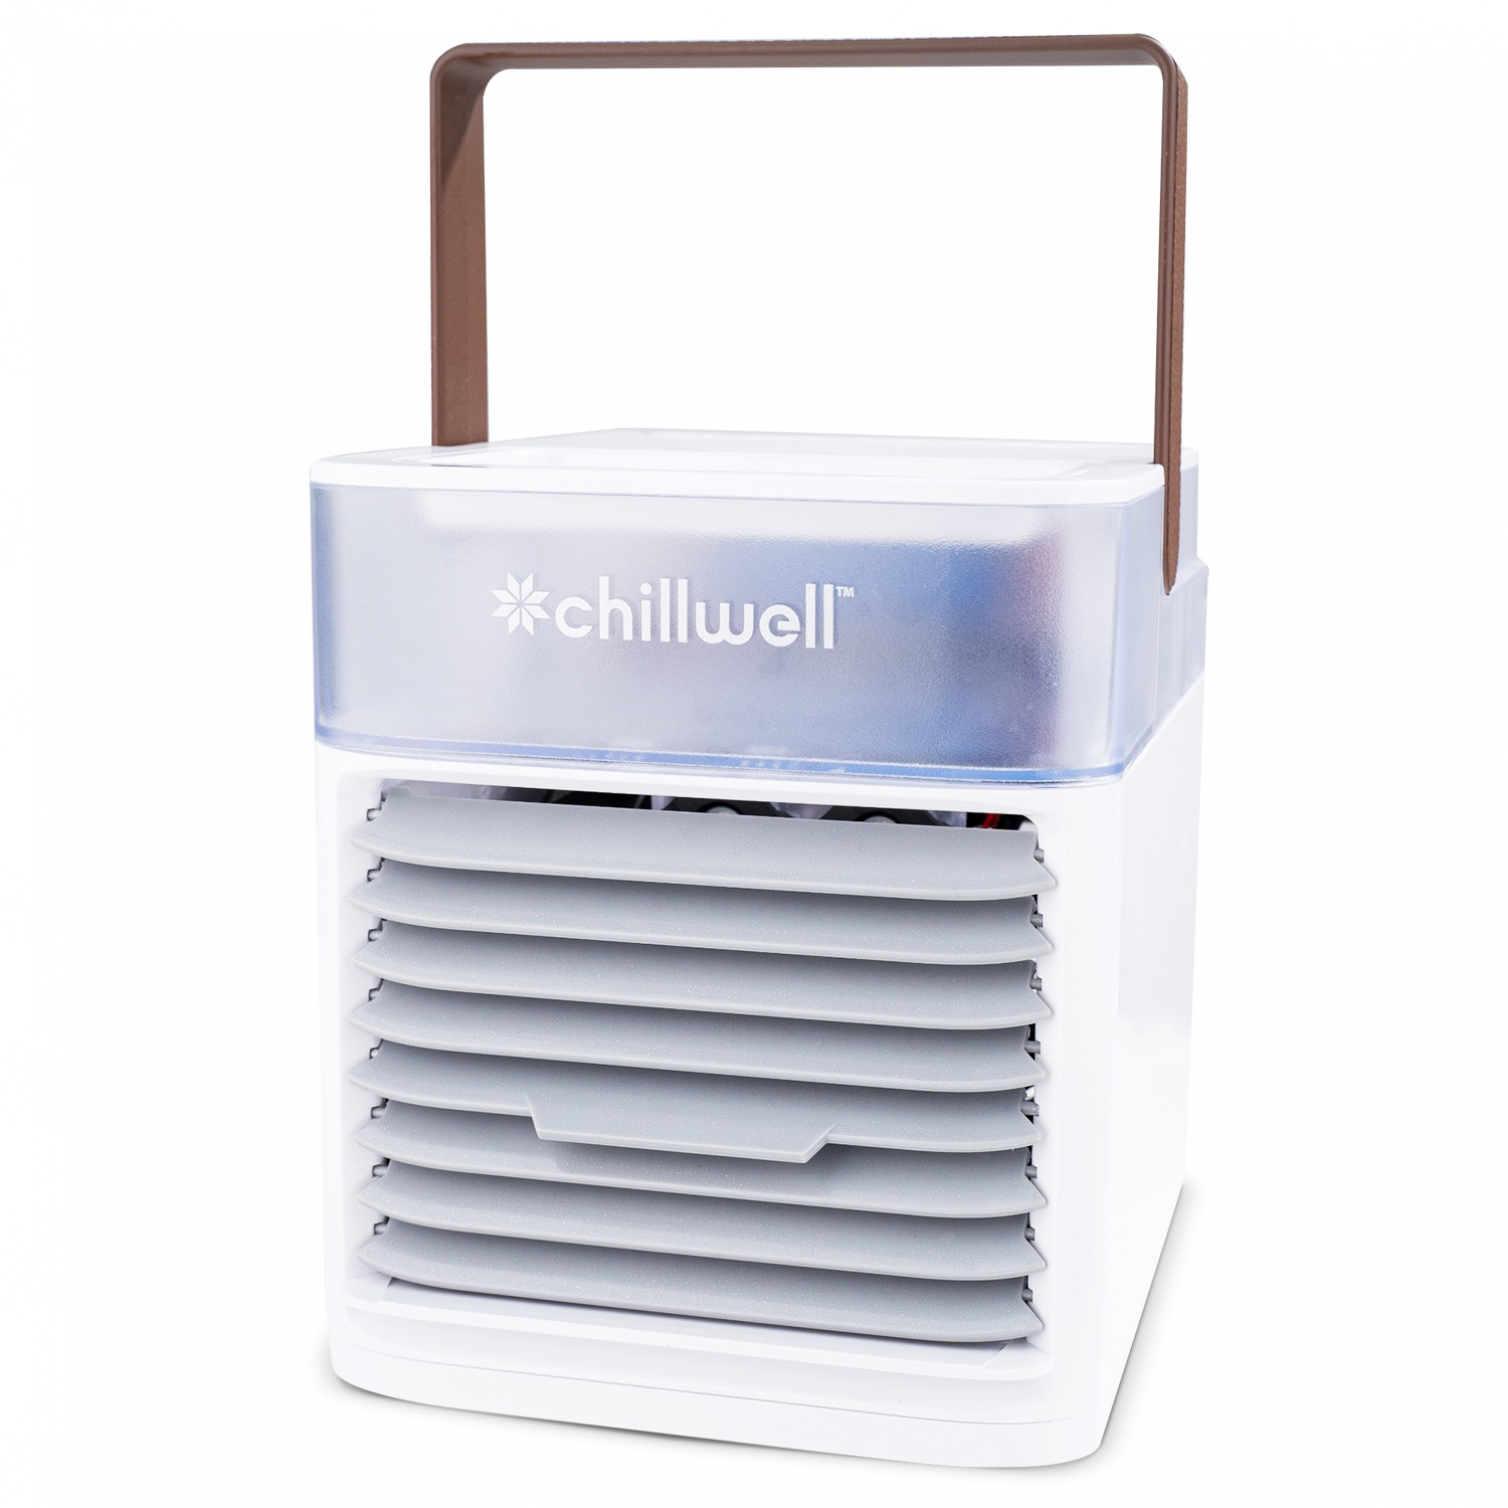 Chillwell AC Portable Ac Amazon